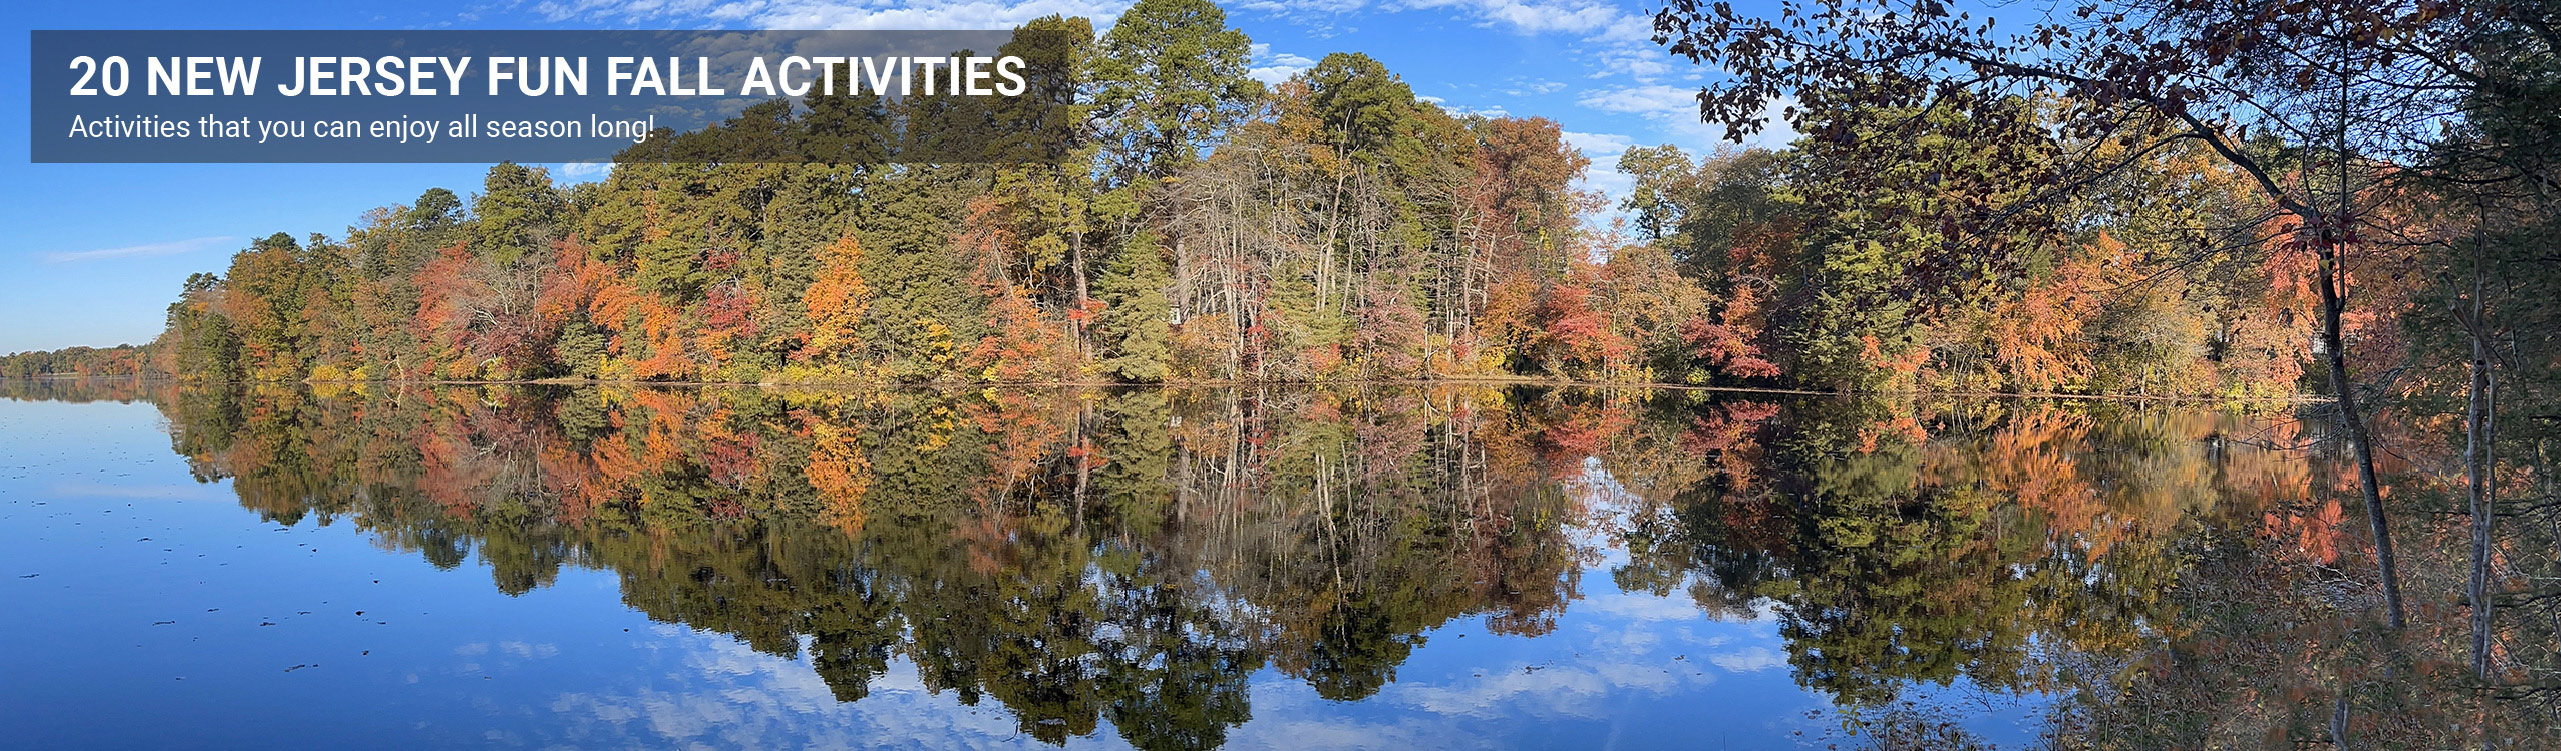 Lake and colorful trees at Mirror Lake. Text reads 20 NJ fun fall activities.